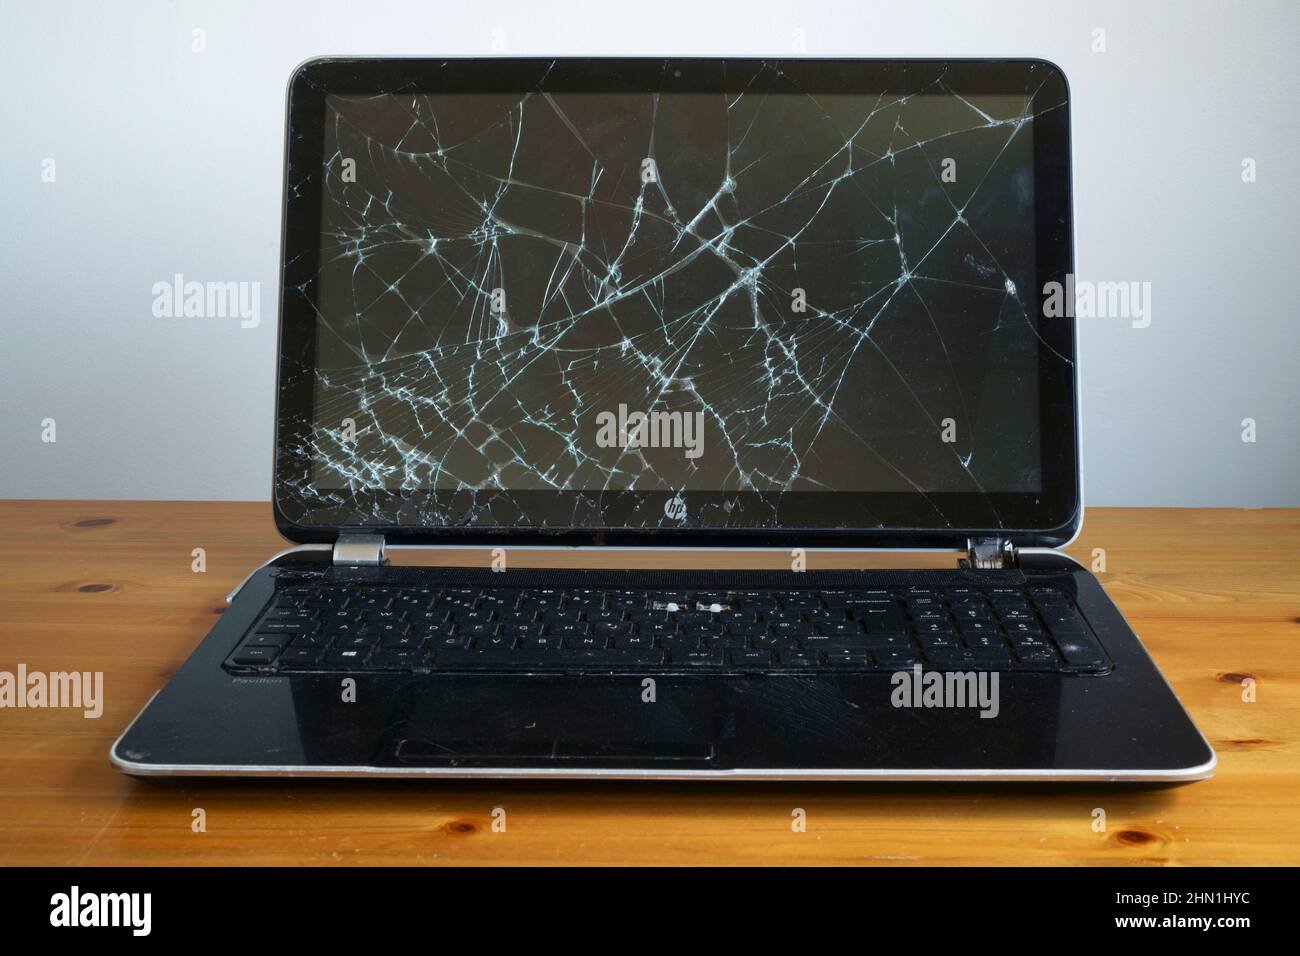 A laptop computer with broken screen. Stock Photo